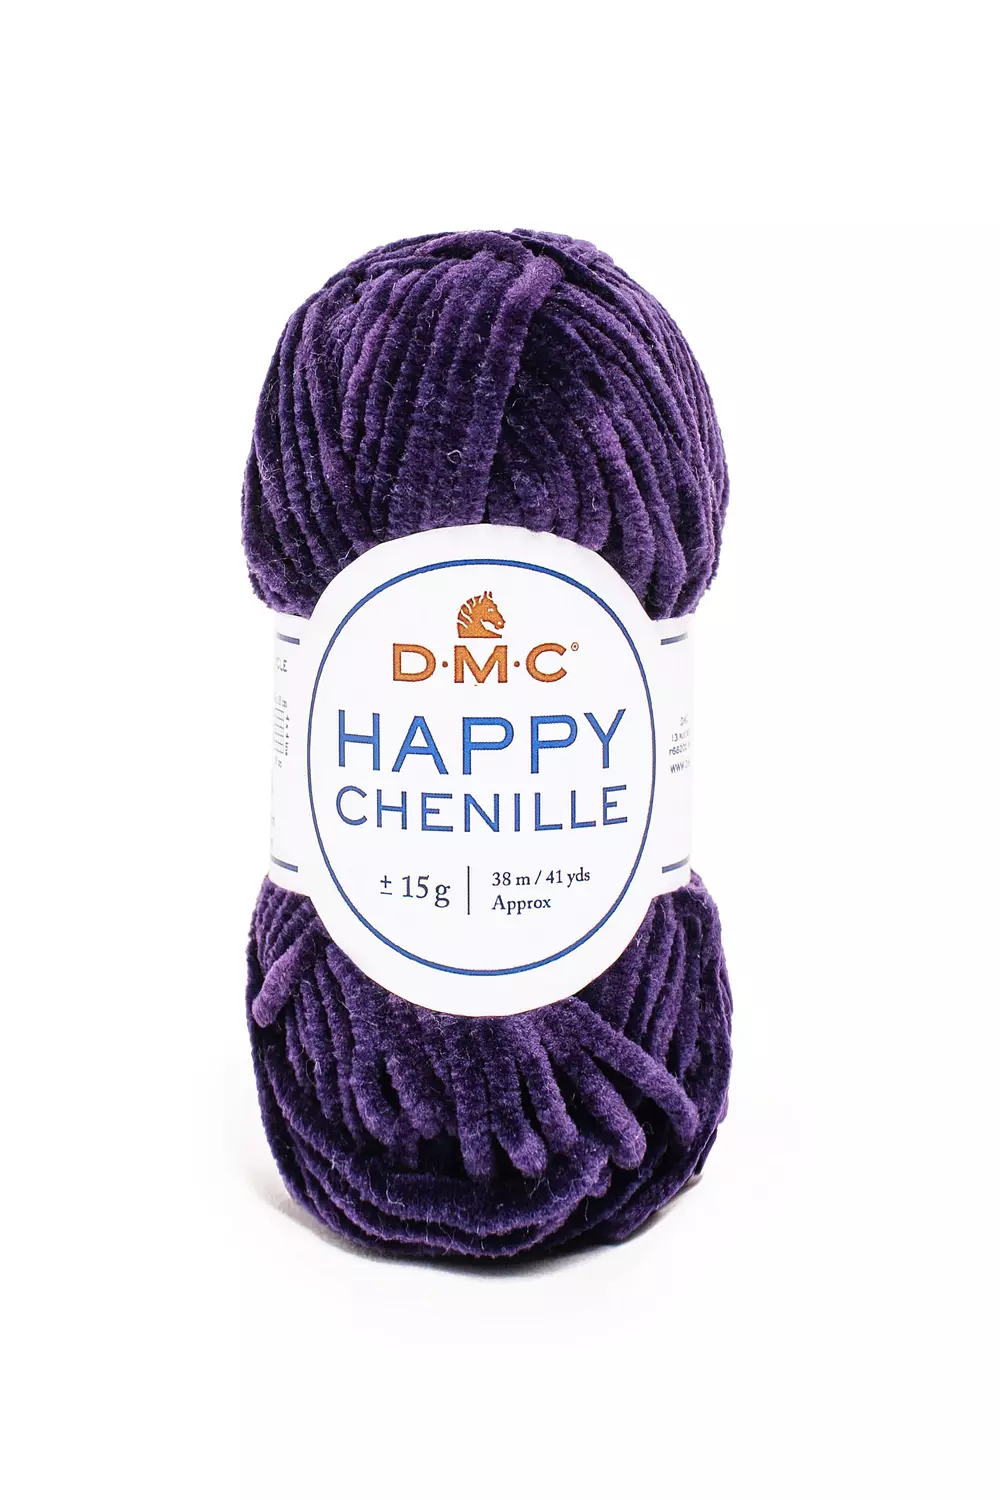 Happy Chenille - Corail 13- Pelote de laine - DMC